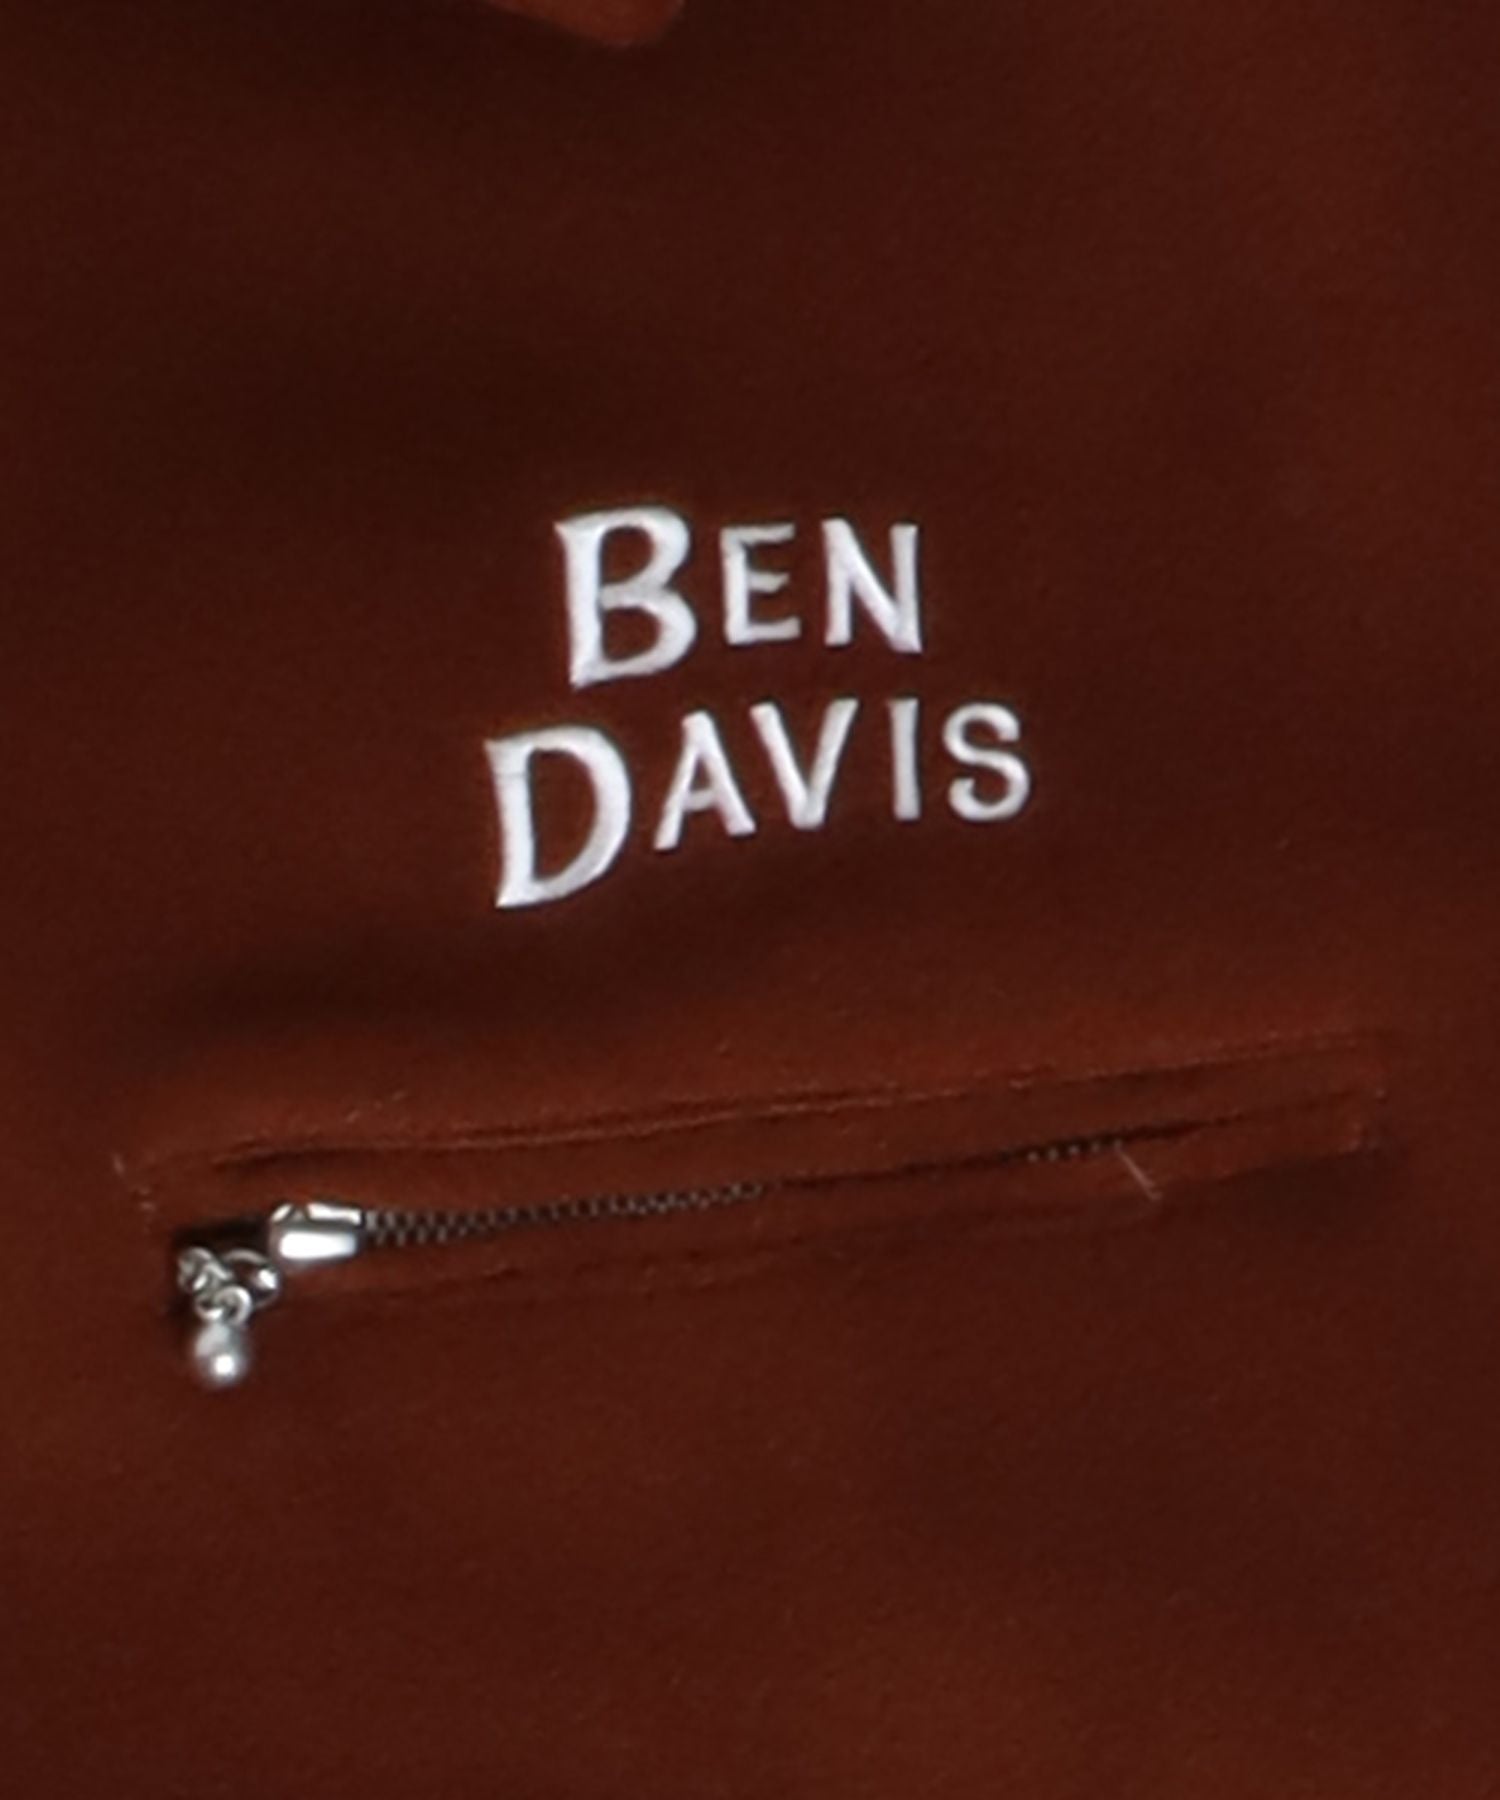 【BEN DAVIS(ベンデイビス)】 WORKAHOLIC MELTON JACKET / スウェード ジャケット チェーン刺繍 ロゴ ブラウン